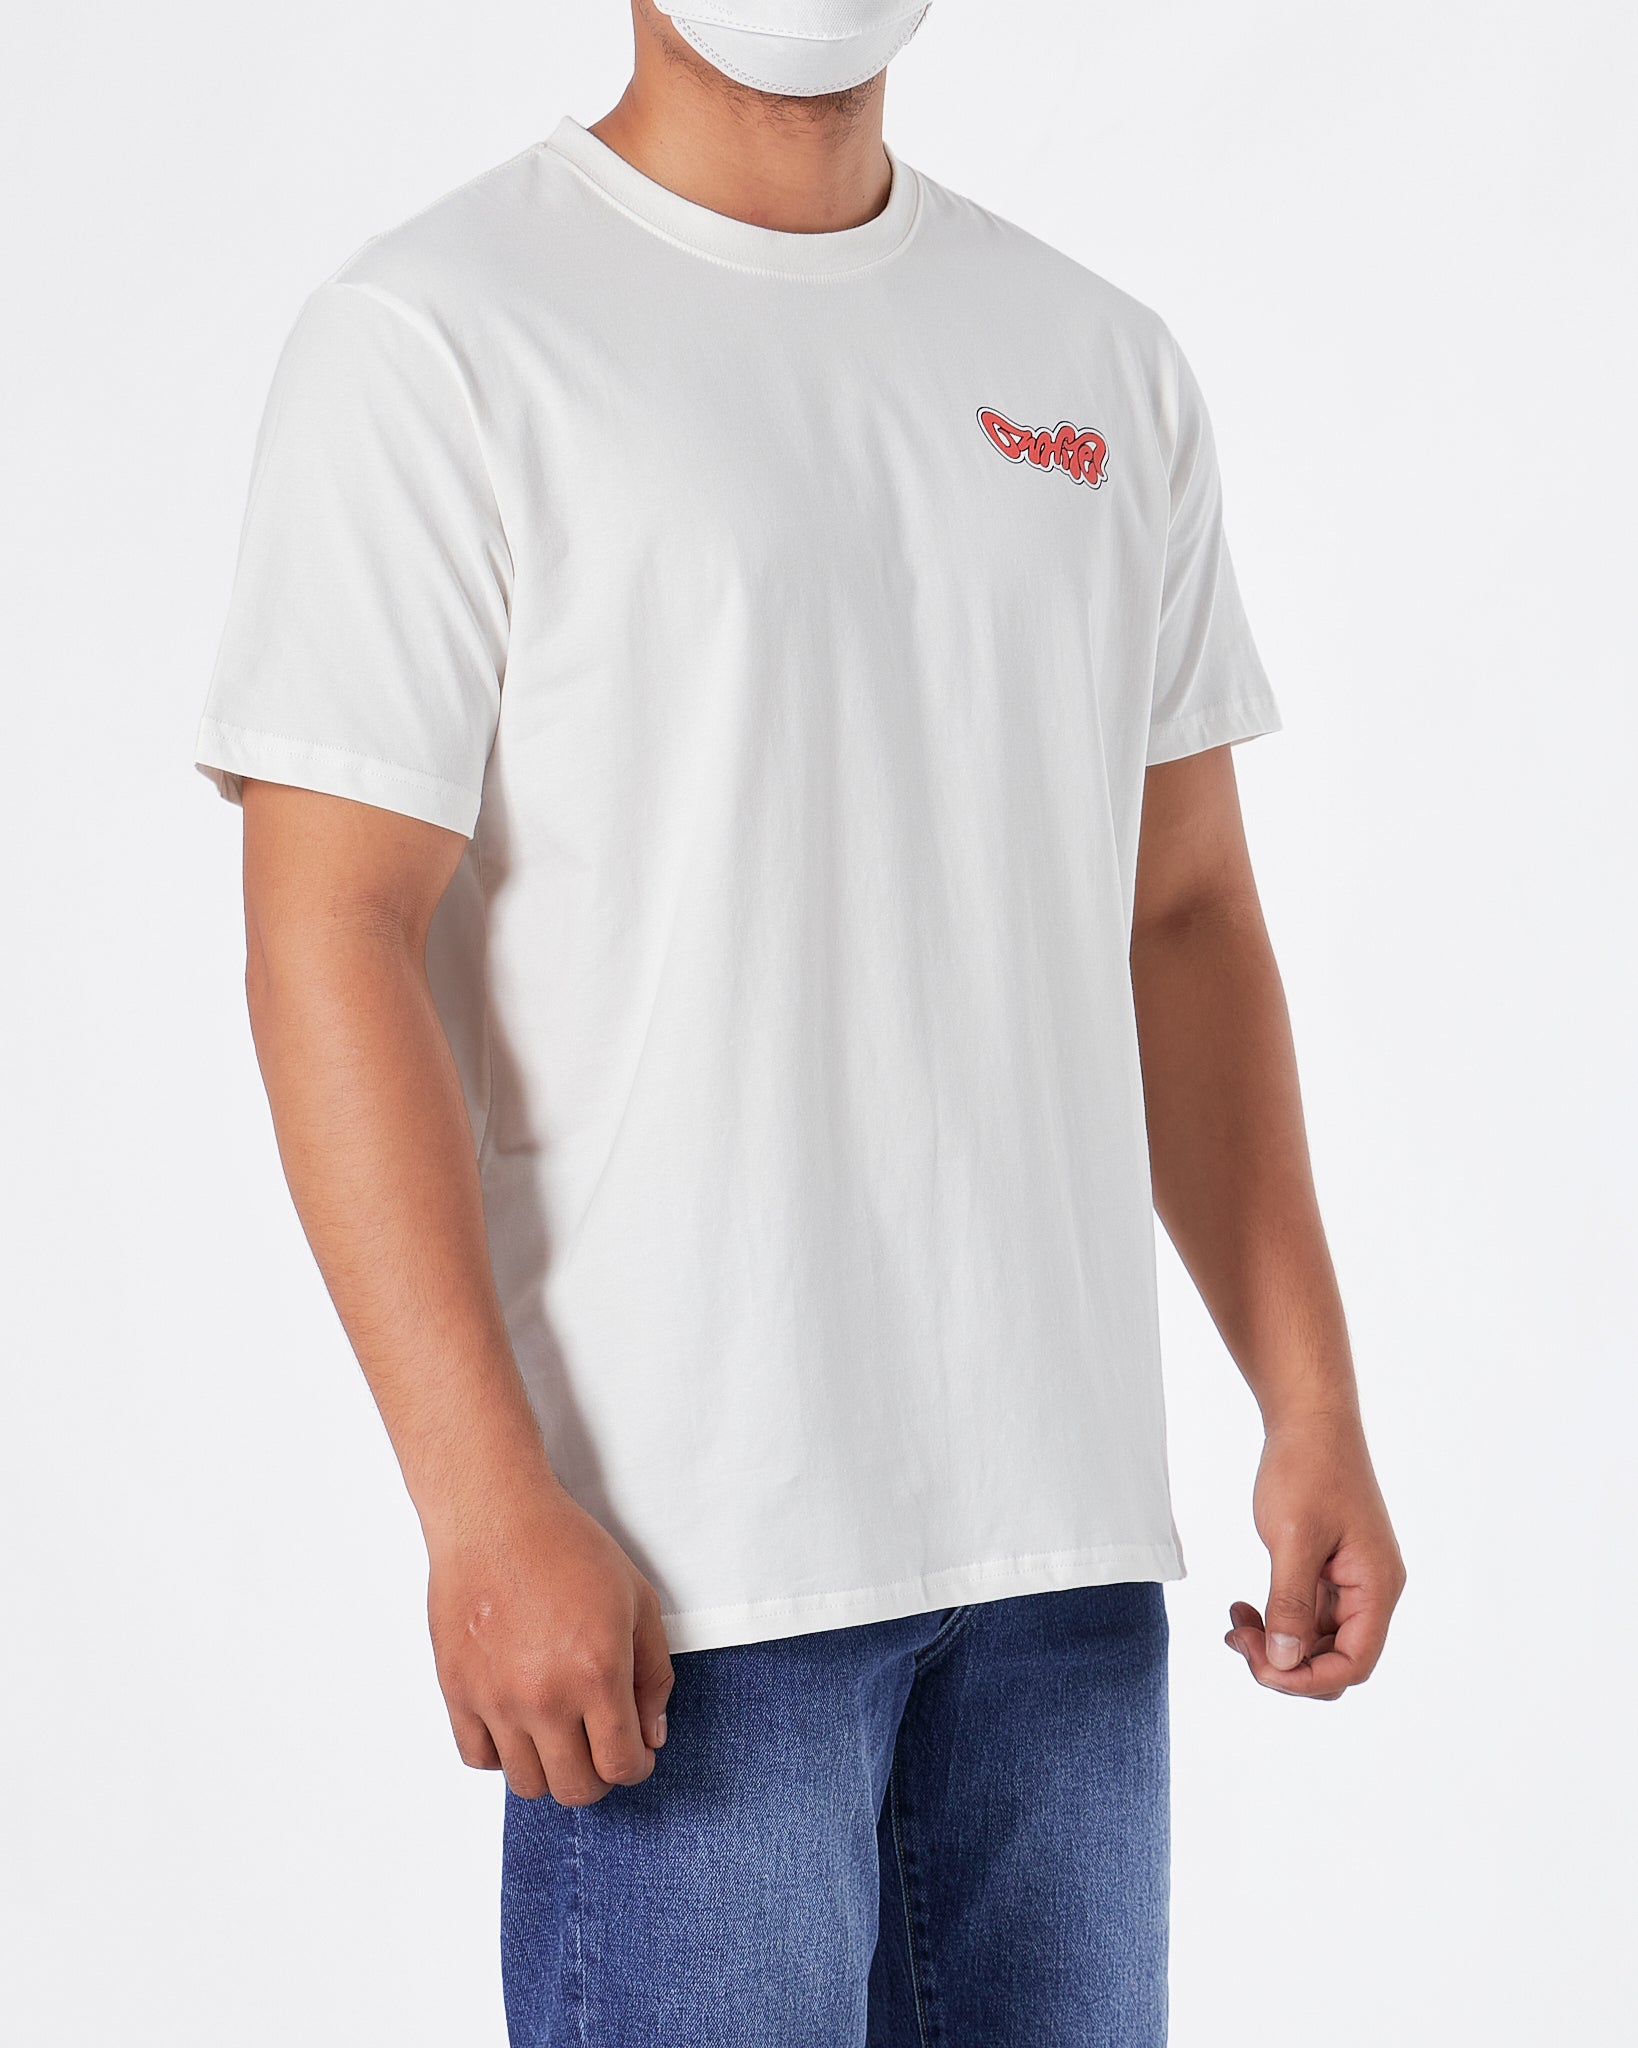 OW Cross Arrow Graffiti Back Printed Men White T-Shirt 21.50